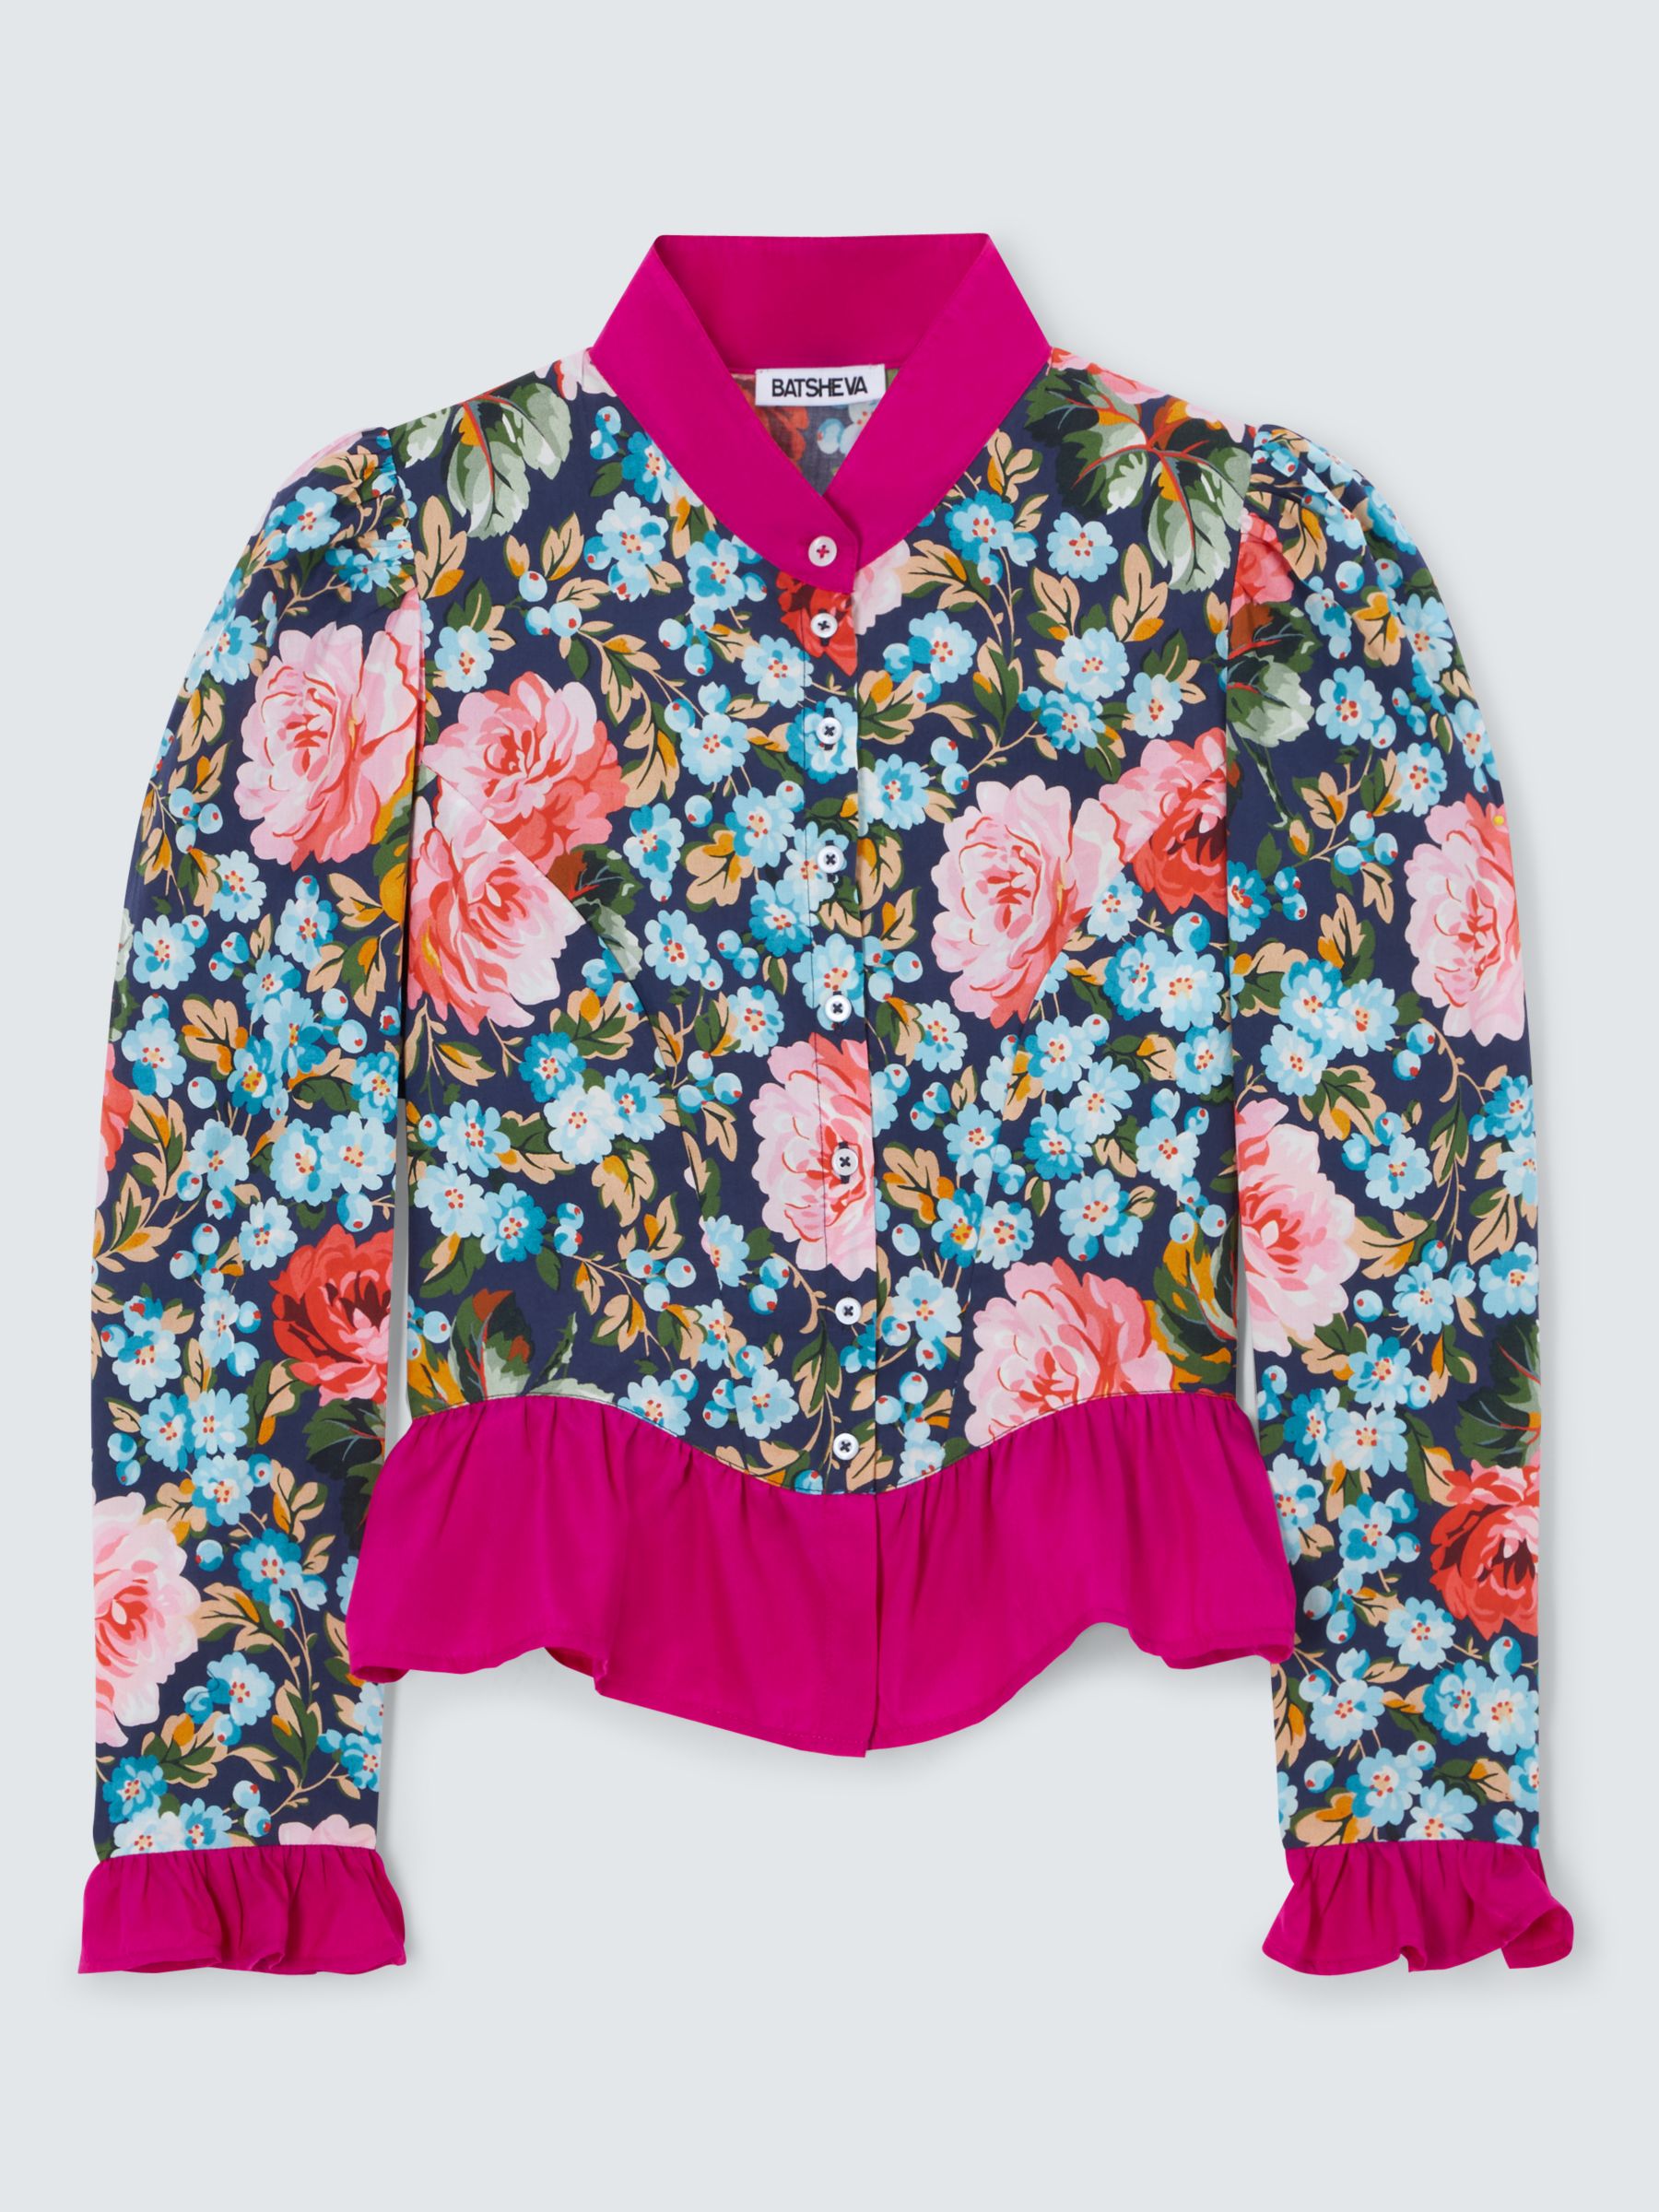 Batsheva x Laura Ashley Grace Emilia Floral Shirt, Pink/Multi, 14